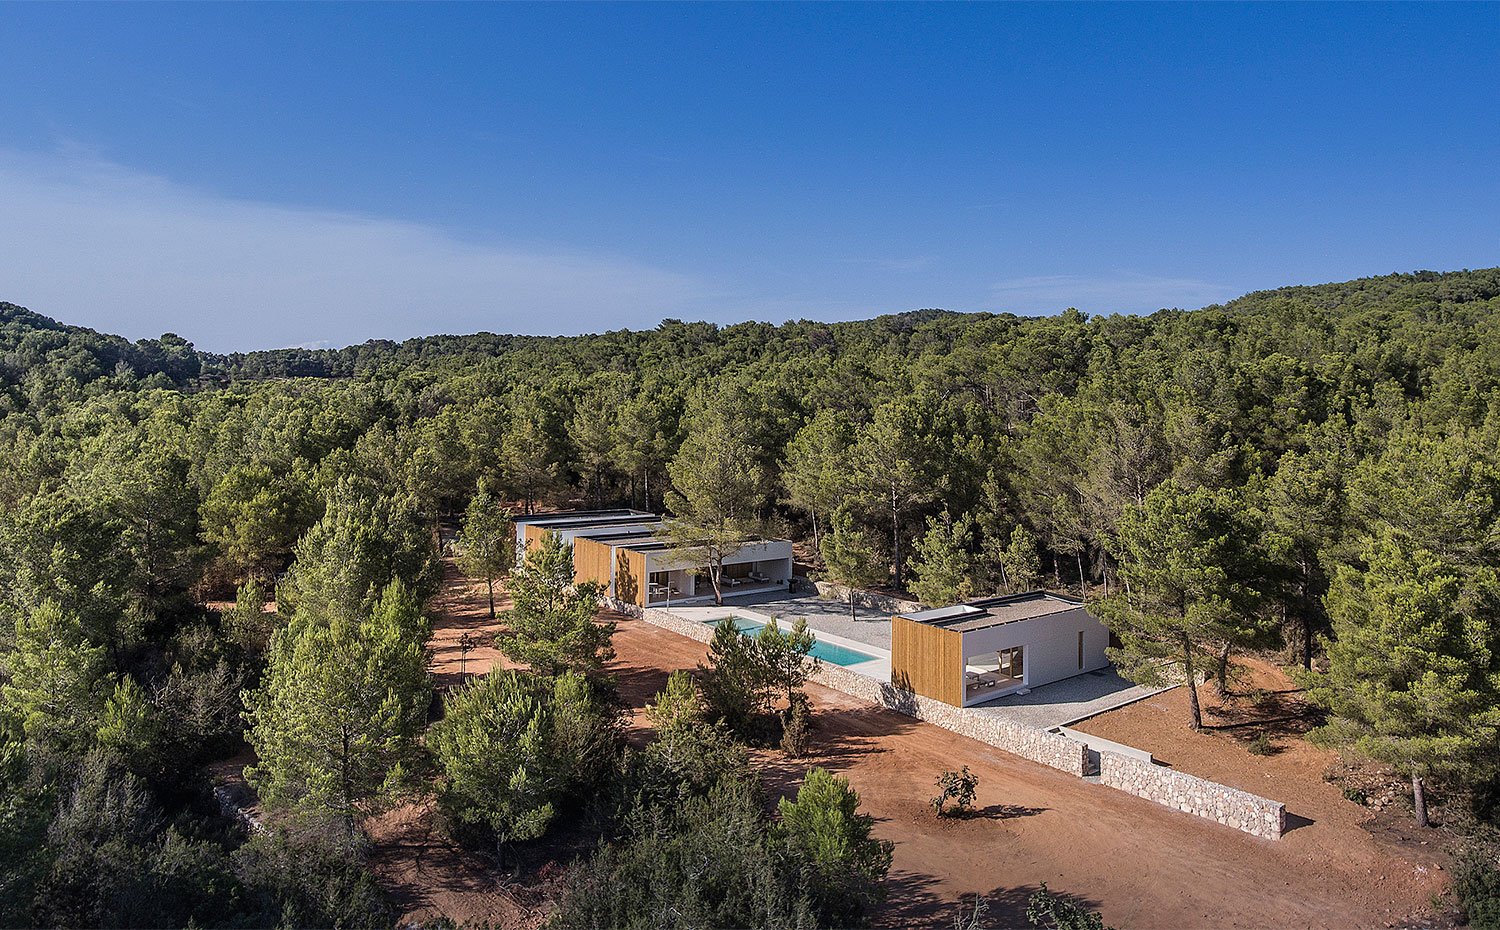 Vista exterior de vivienda en paisaje natural de Ibiza